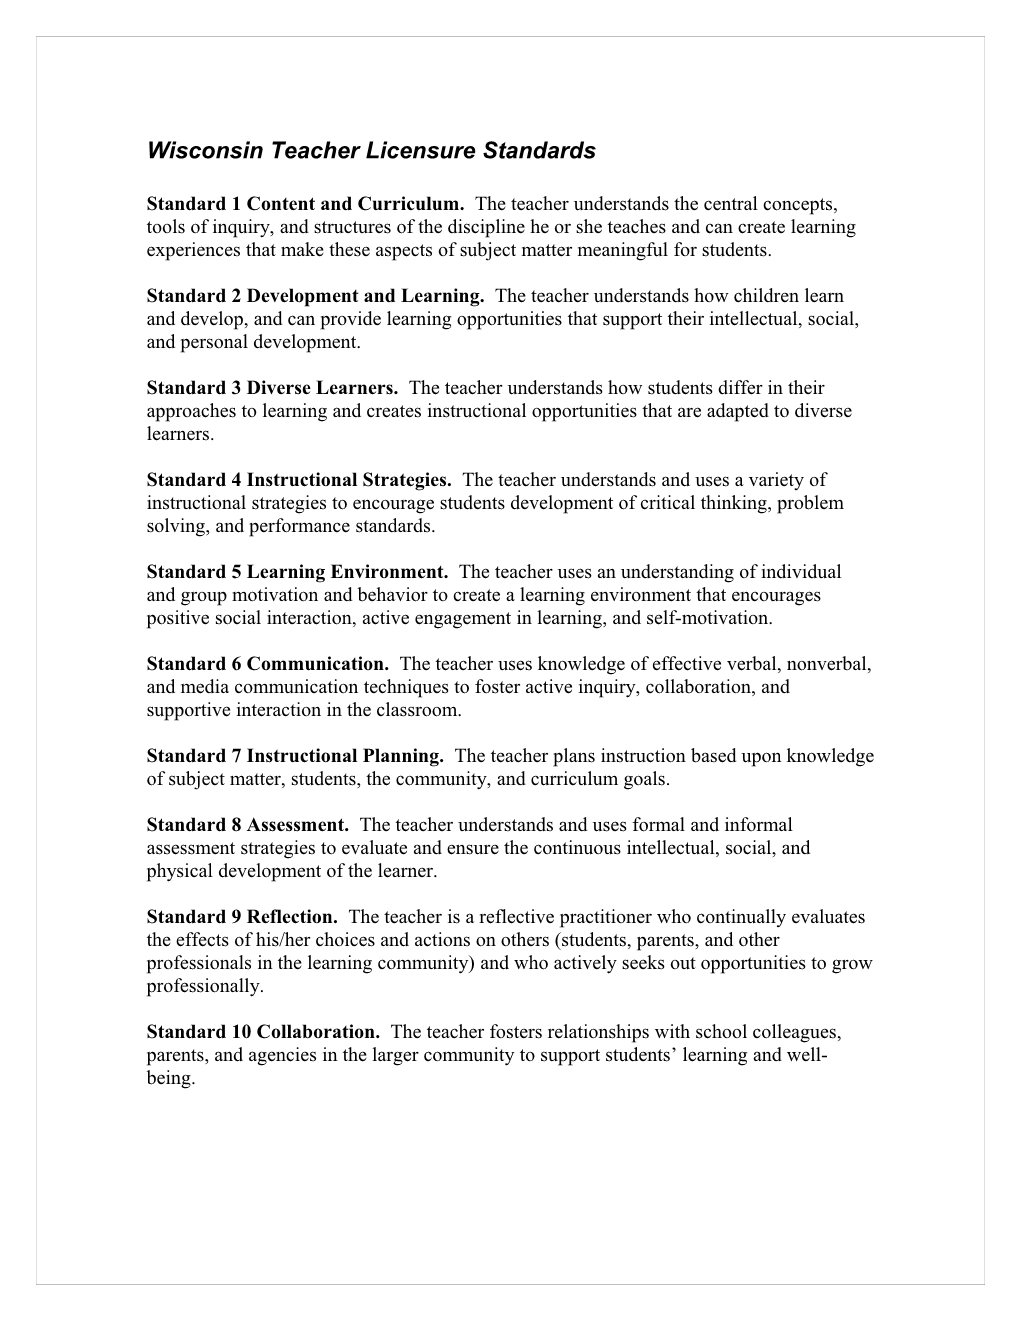 Wisconsin Teacher Licensure/ INTASC Standards